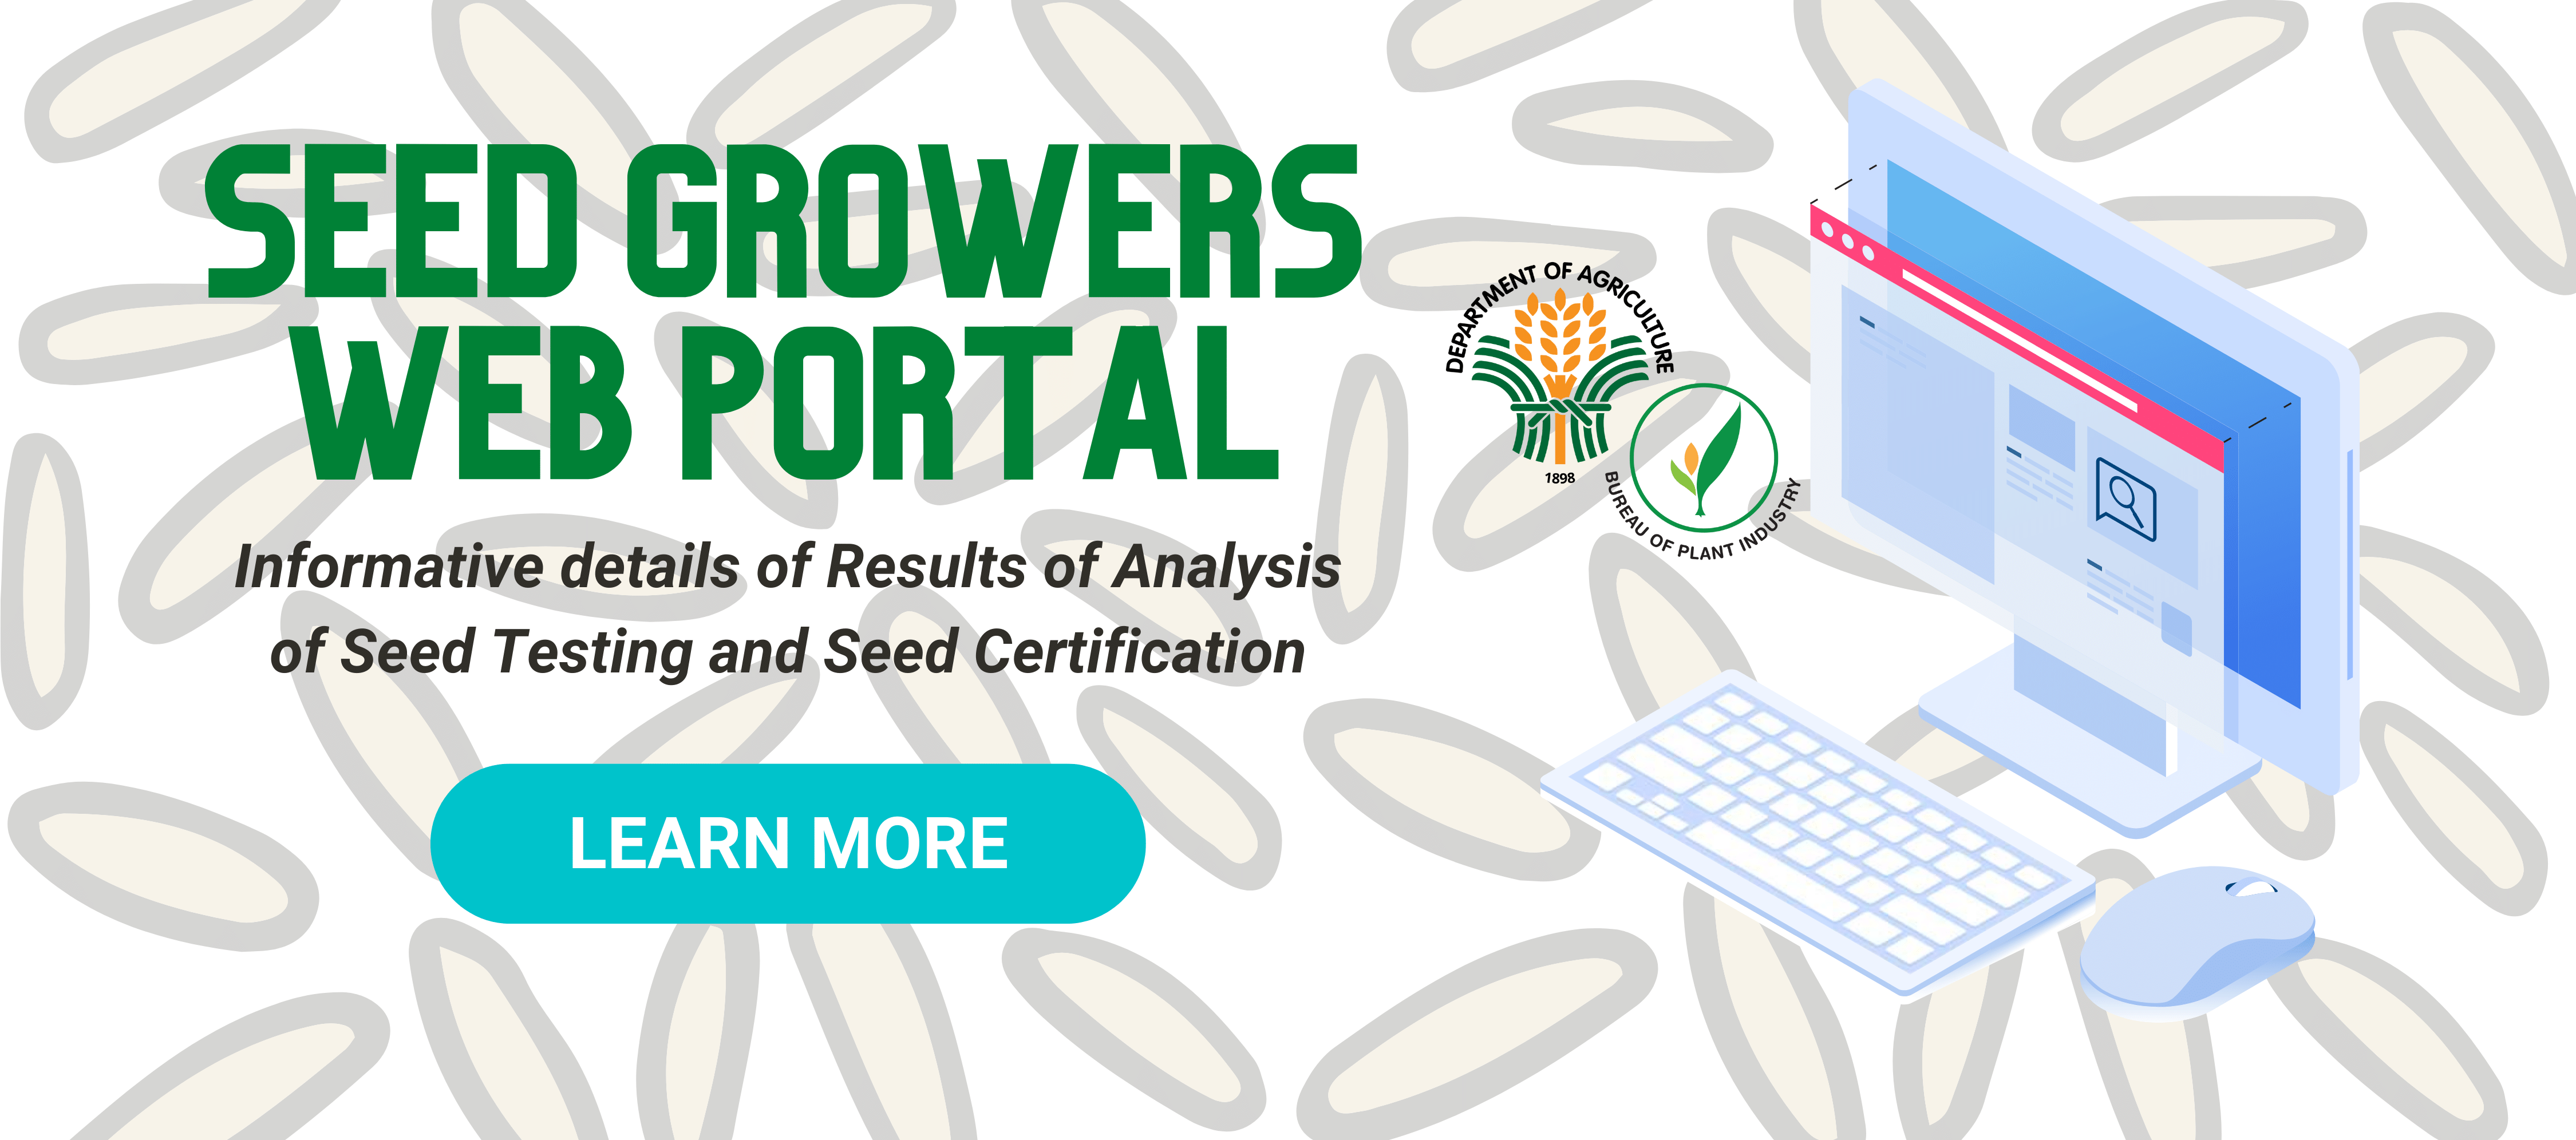 BPI Seed Growers Web Portal